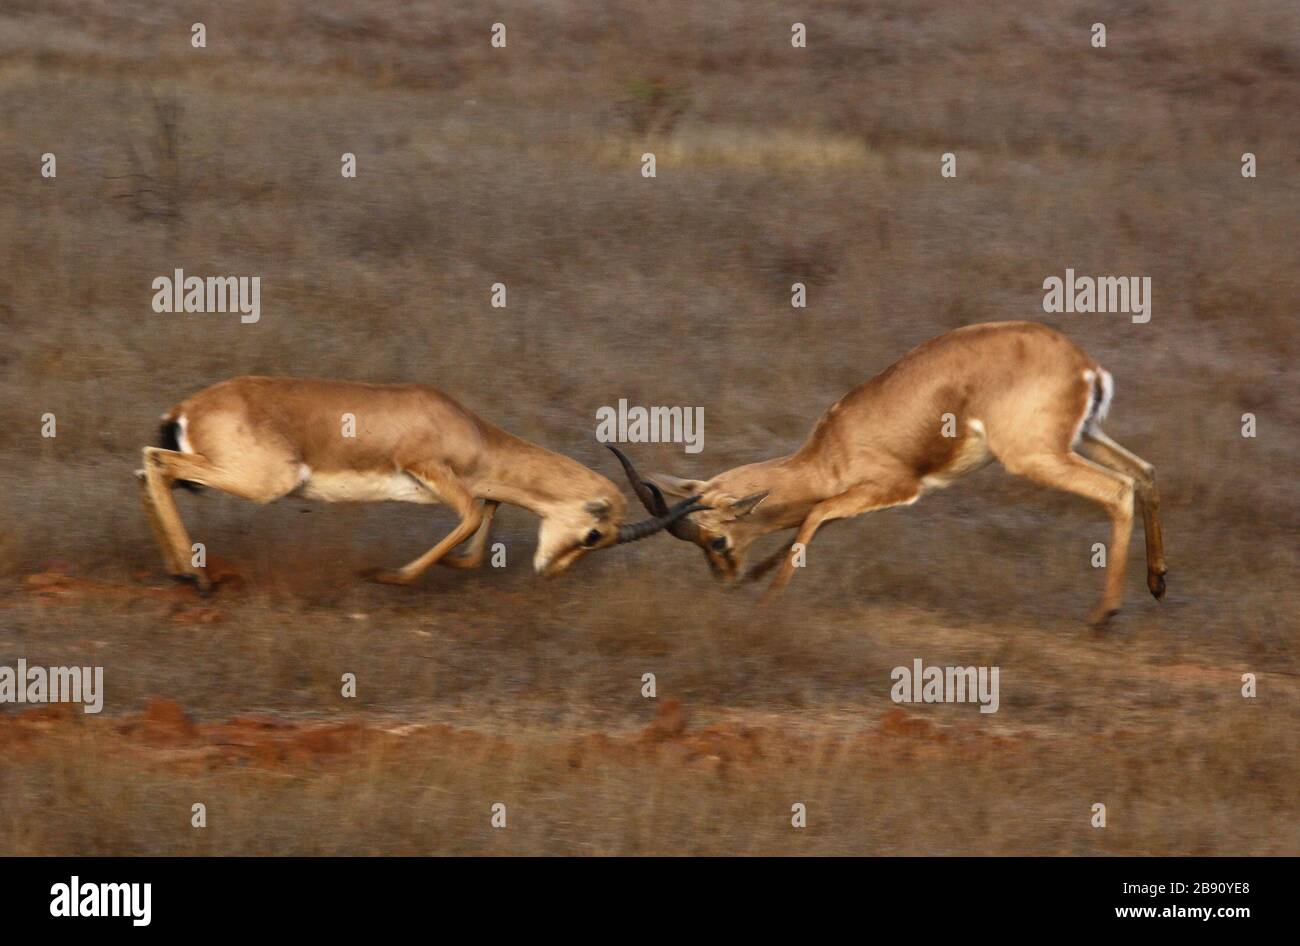 Indian Gazelle Stock Photo